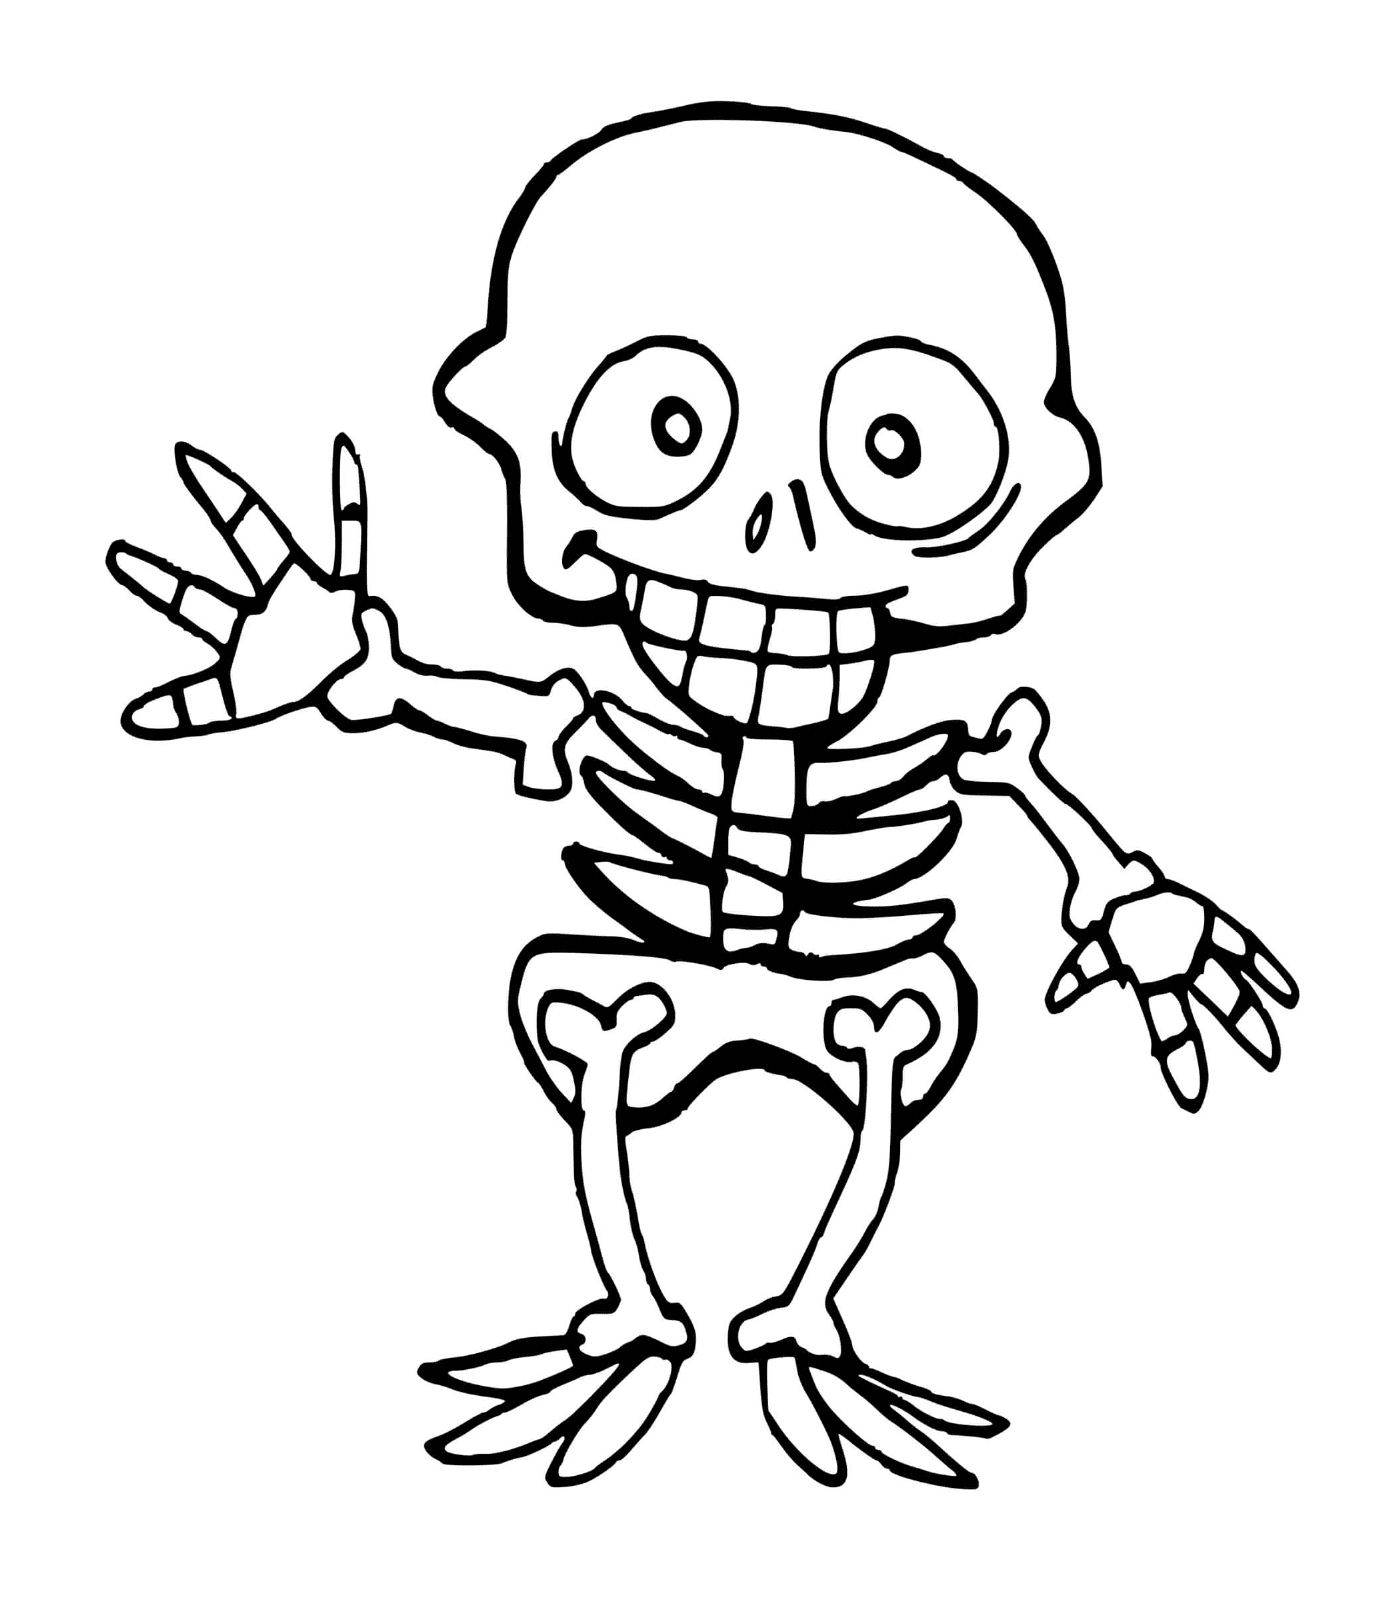  Bambino scheletro per Halloween, mani in alto 